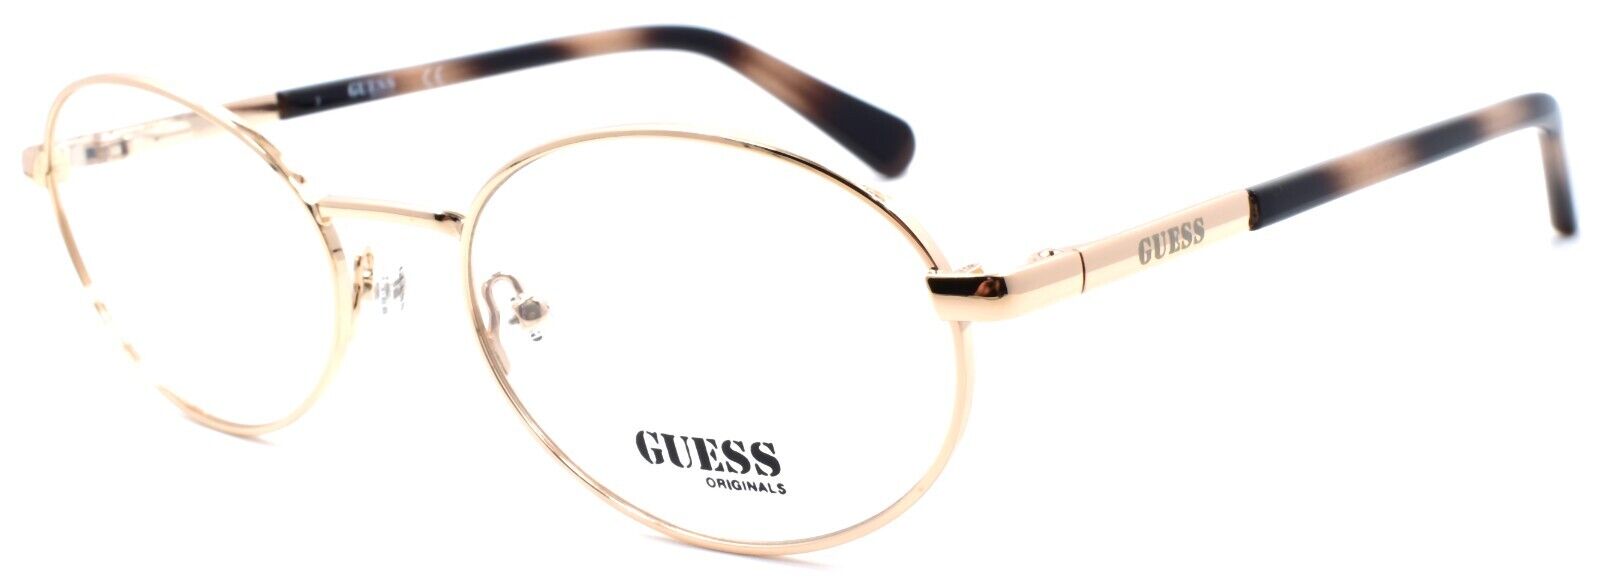 1-GUESS GU8239 032 Eyeglasses Frames 55-19-140 Pale Gold-889214282613-IKSpecs